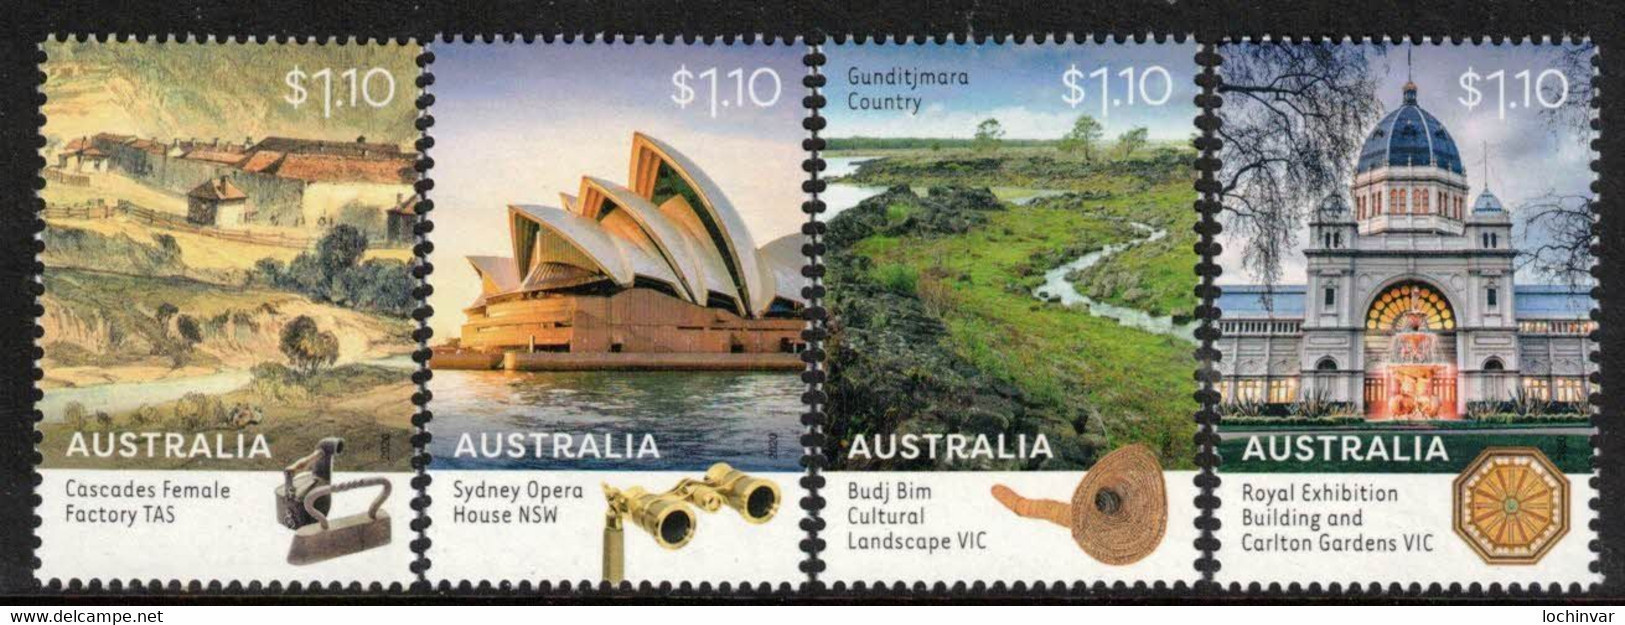 AUSTRALIA, 2020 WORLD HERITAGE SITES 4 MNH - Mint Stamps